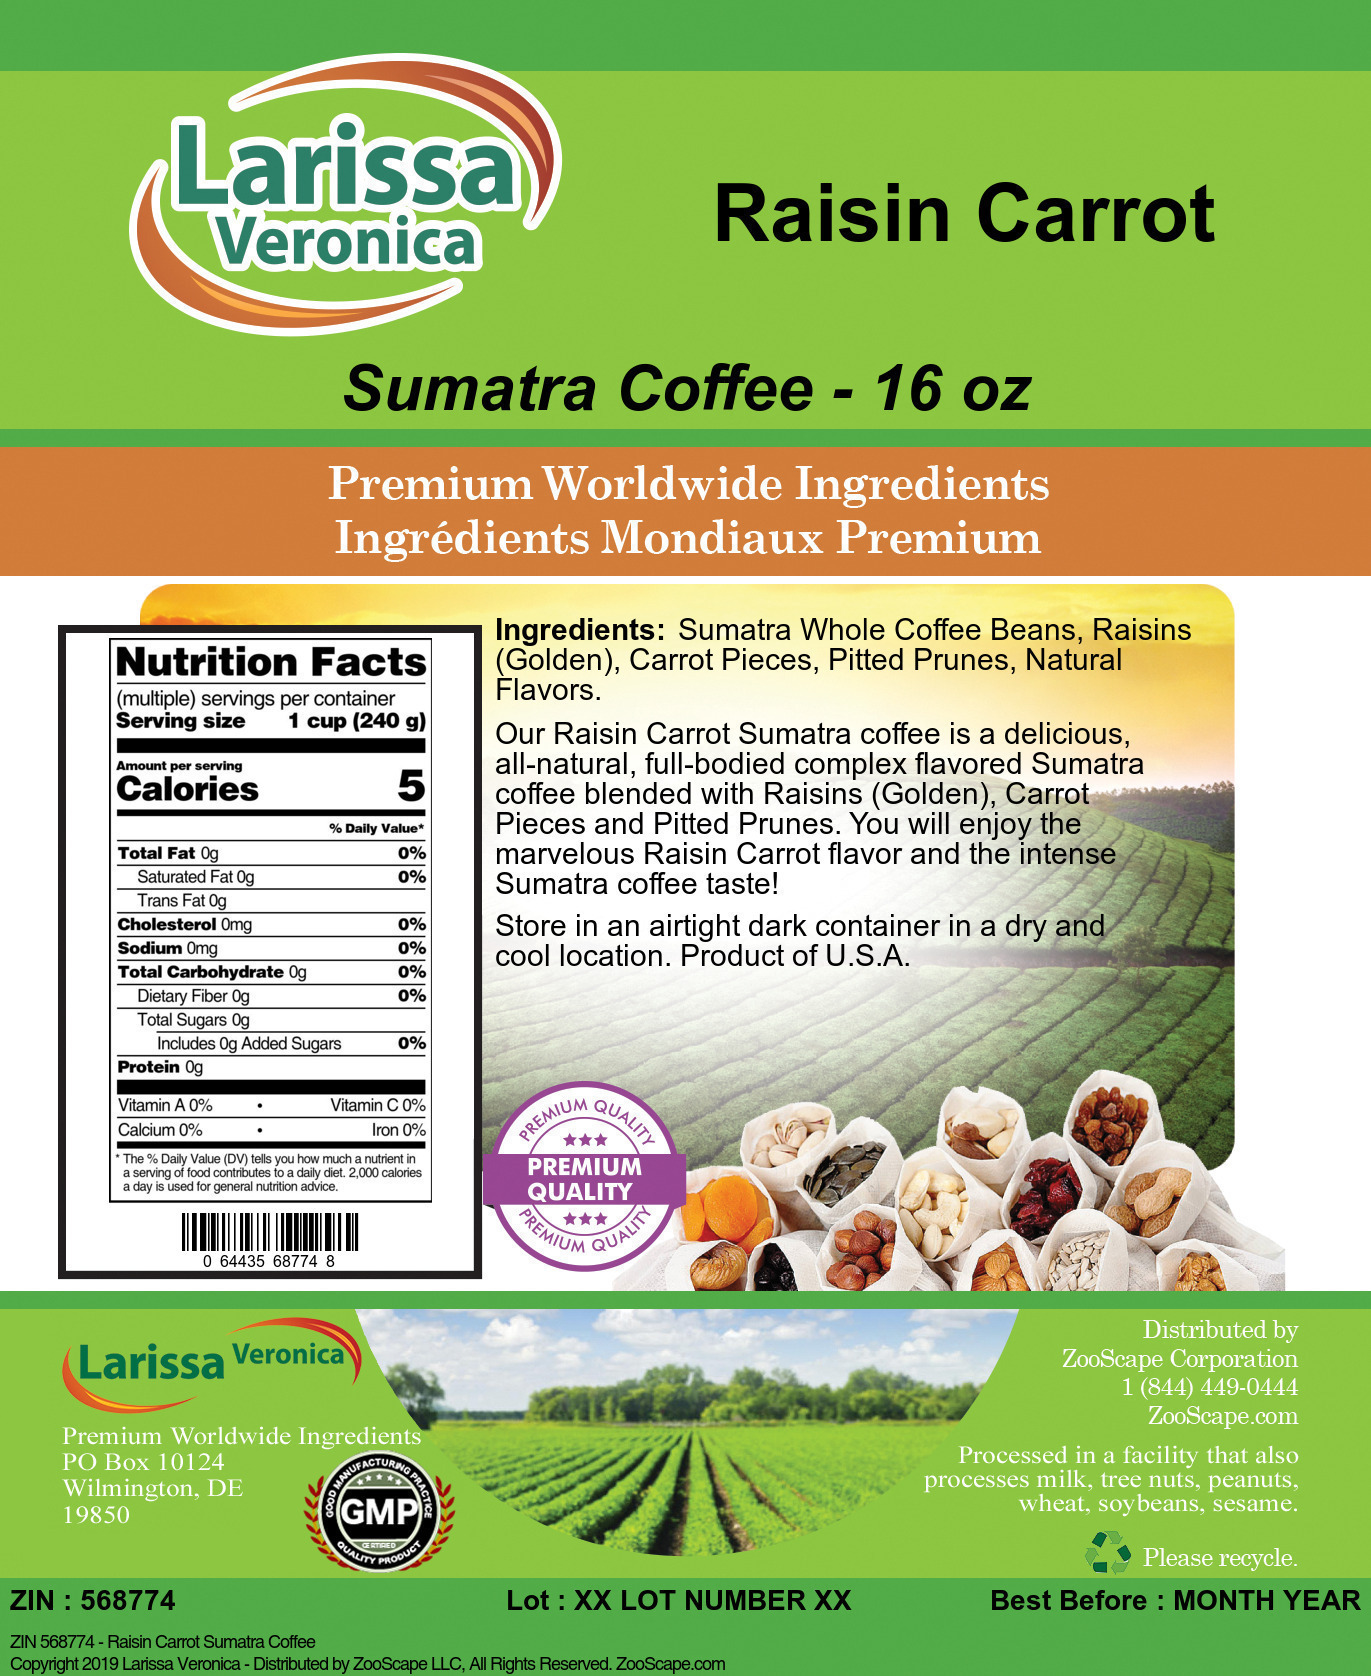 Raisin Carrot Sumatra Coffee - Label